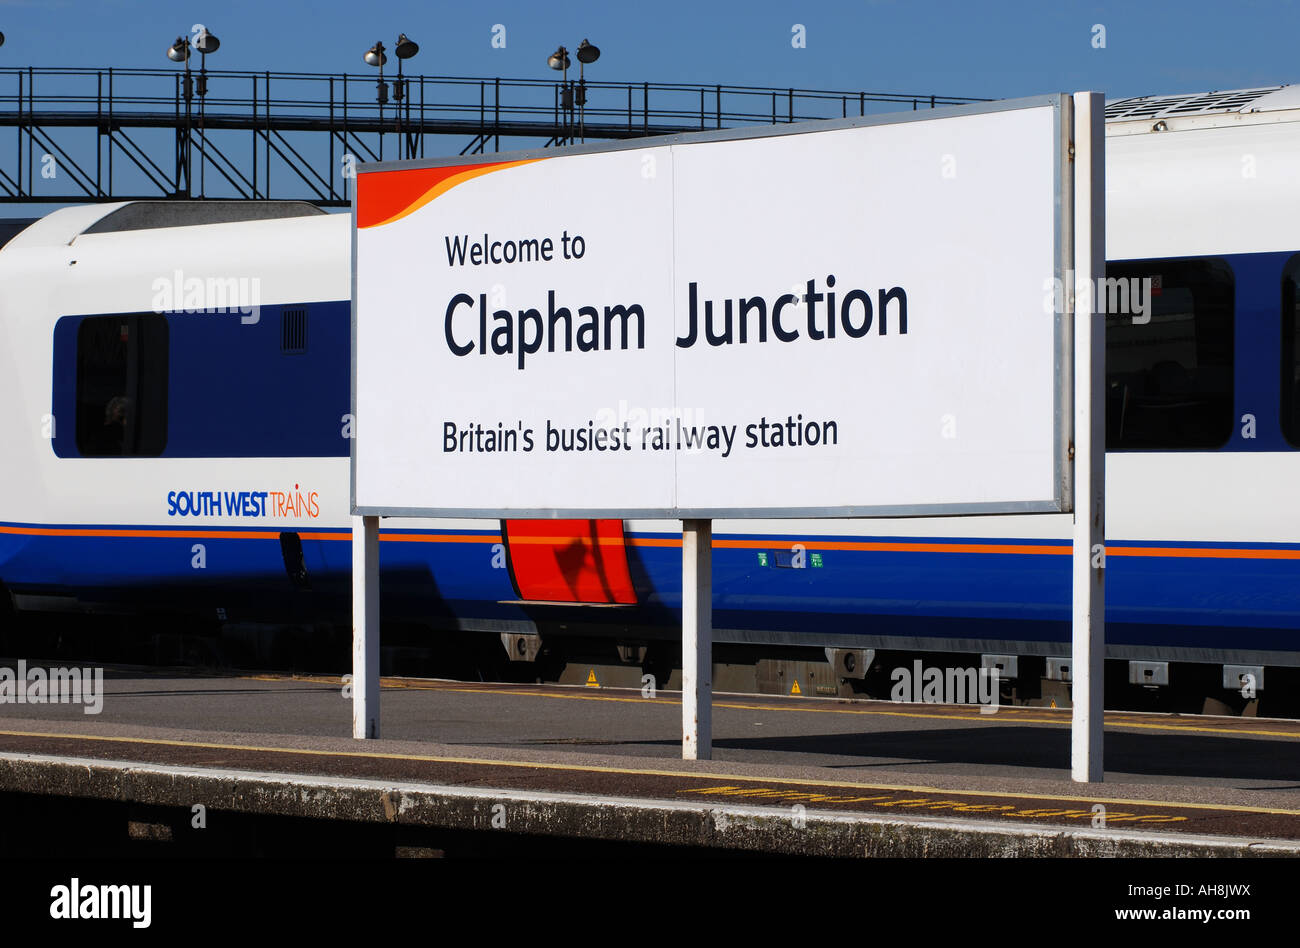 Clapham Junction railway station sign, London, England, UK Stock Photo